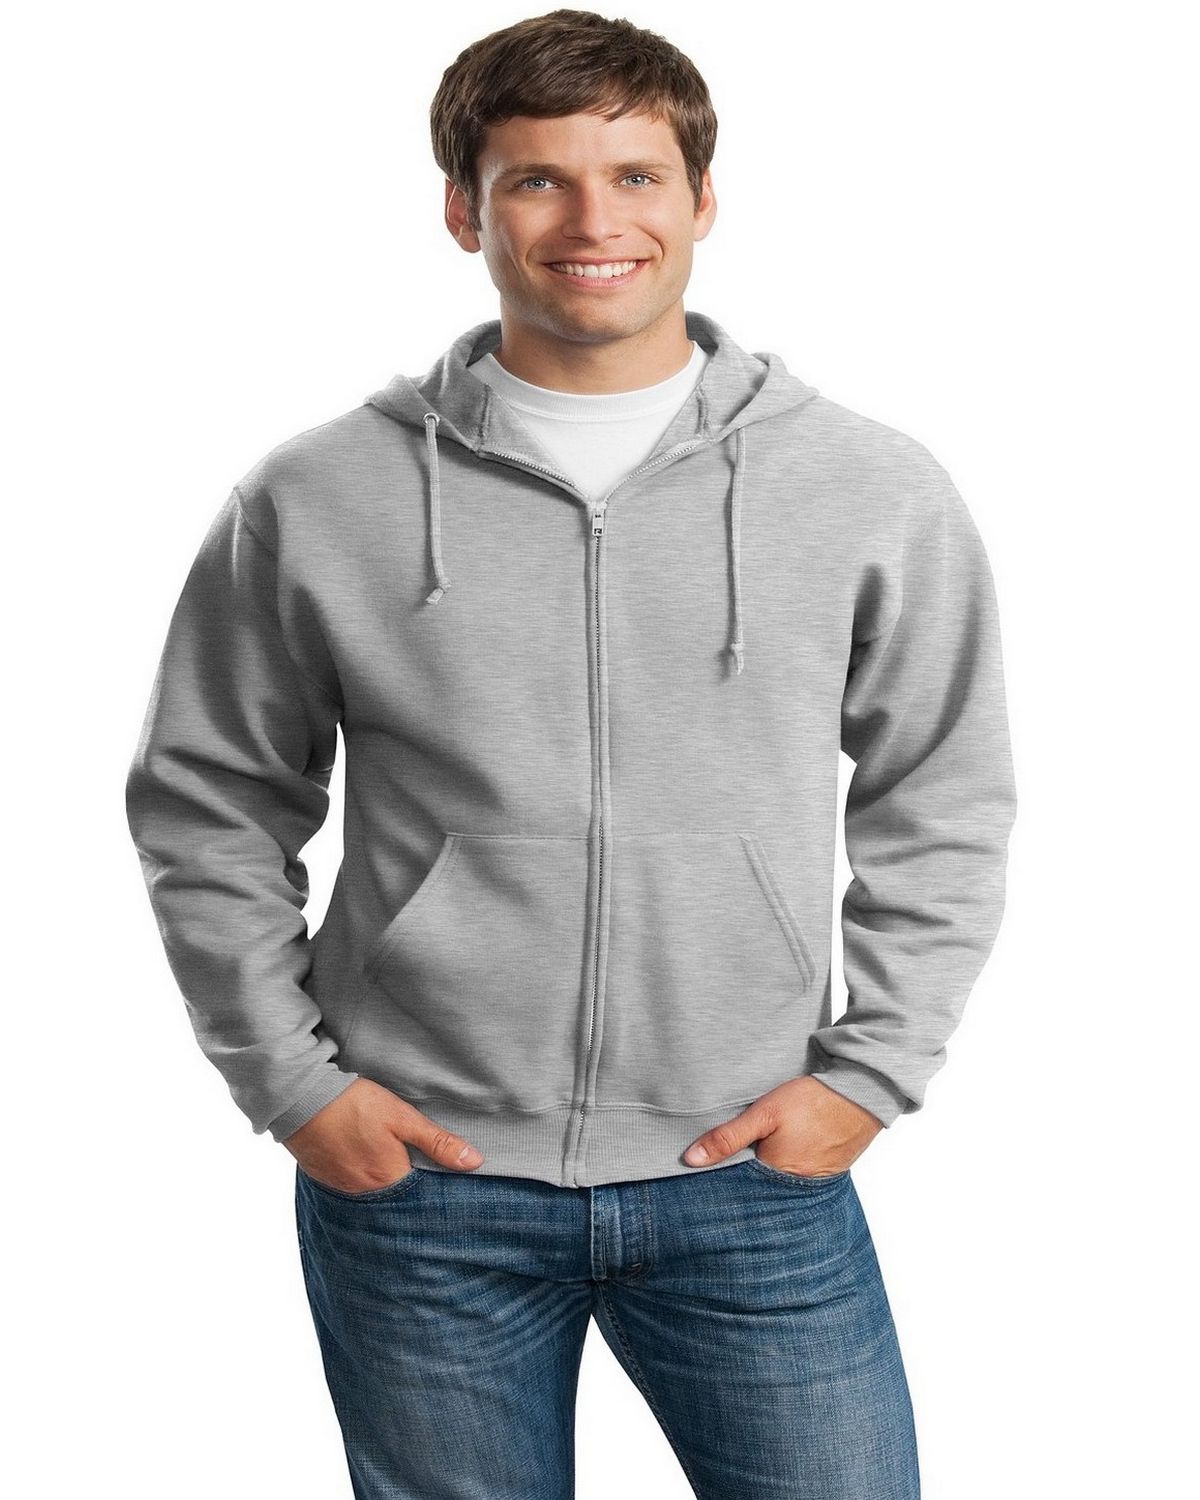 Size Chart for Jerzees 993M NuBlend Full-Zip Hooded Sweatshirt